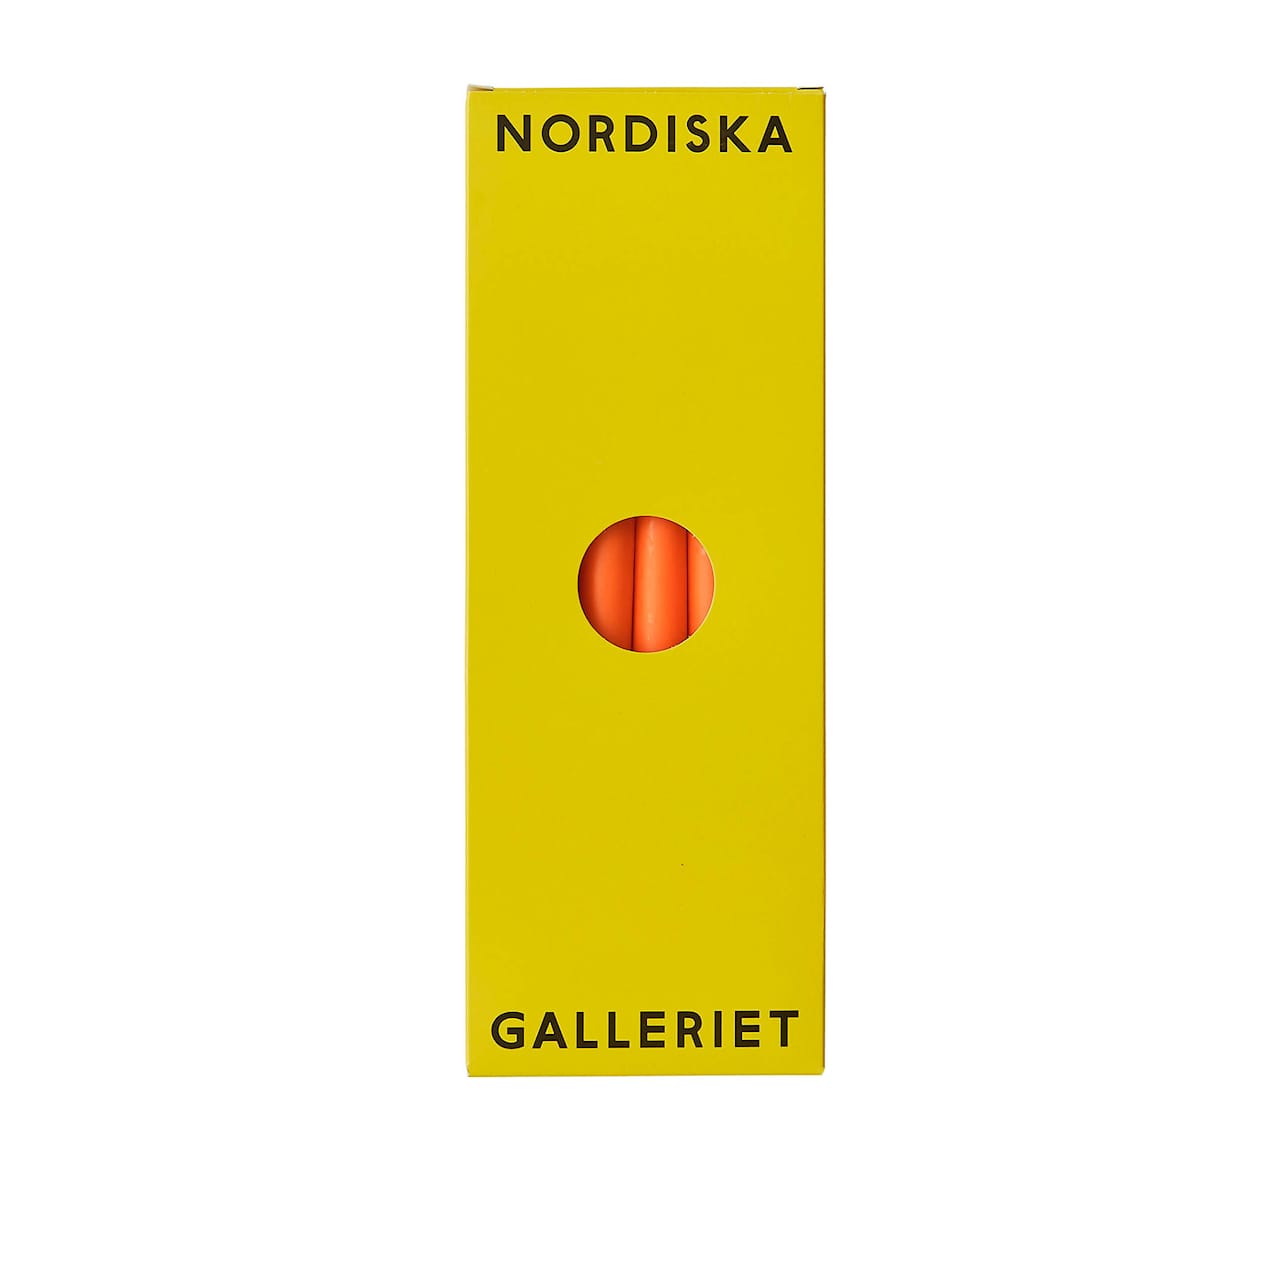 Nordiska Galleriet Candles Pack of 6 - Orange